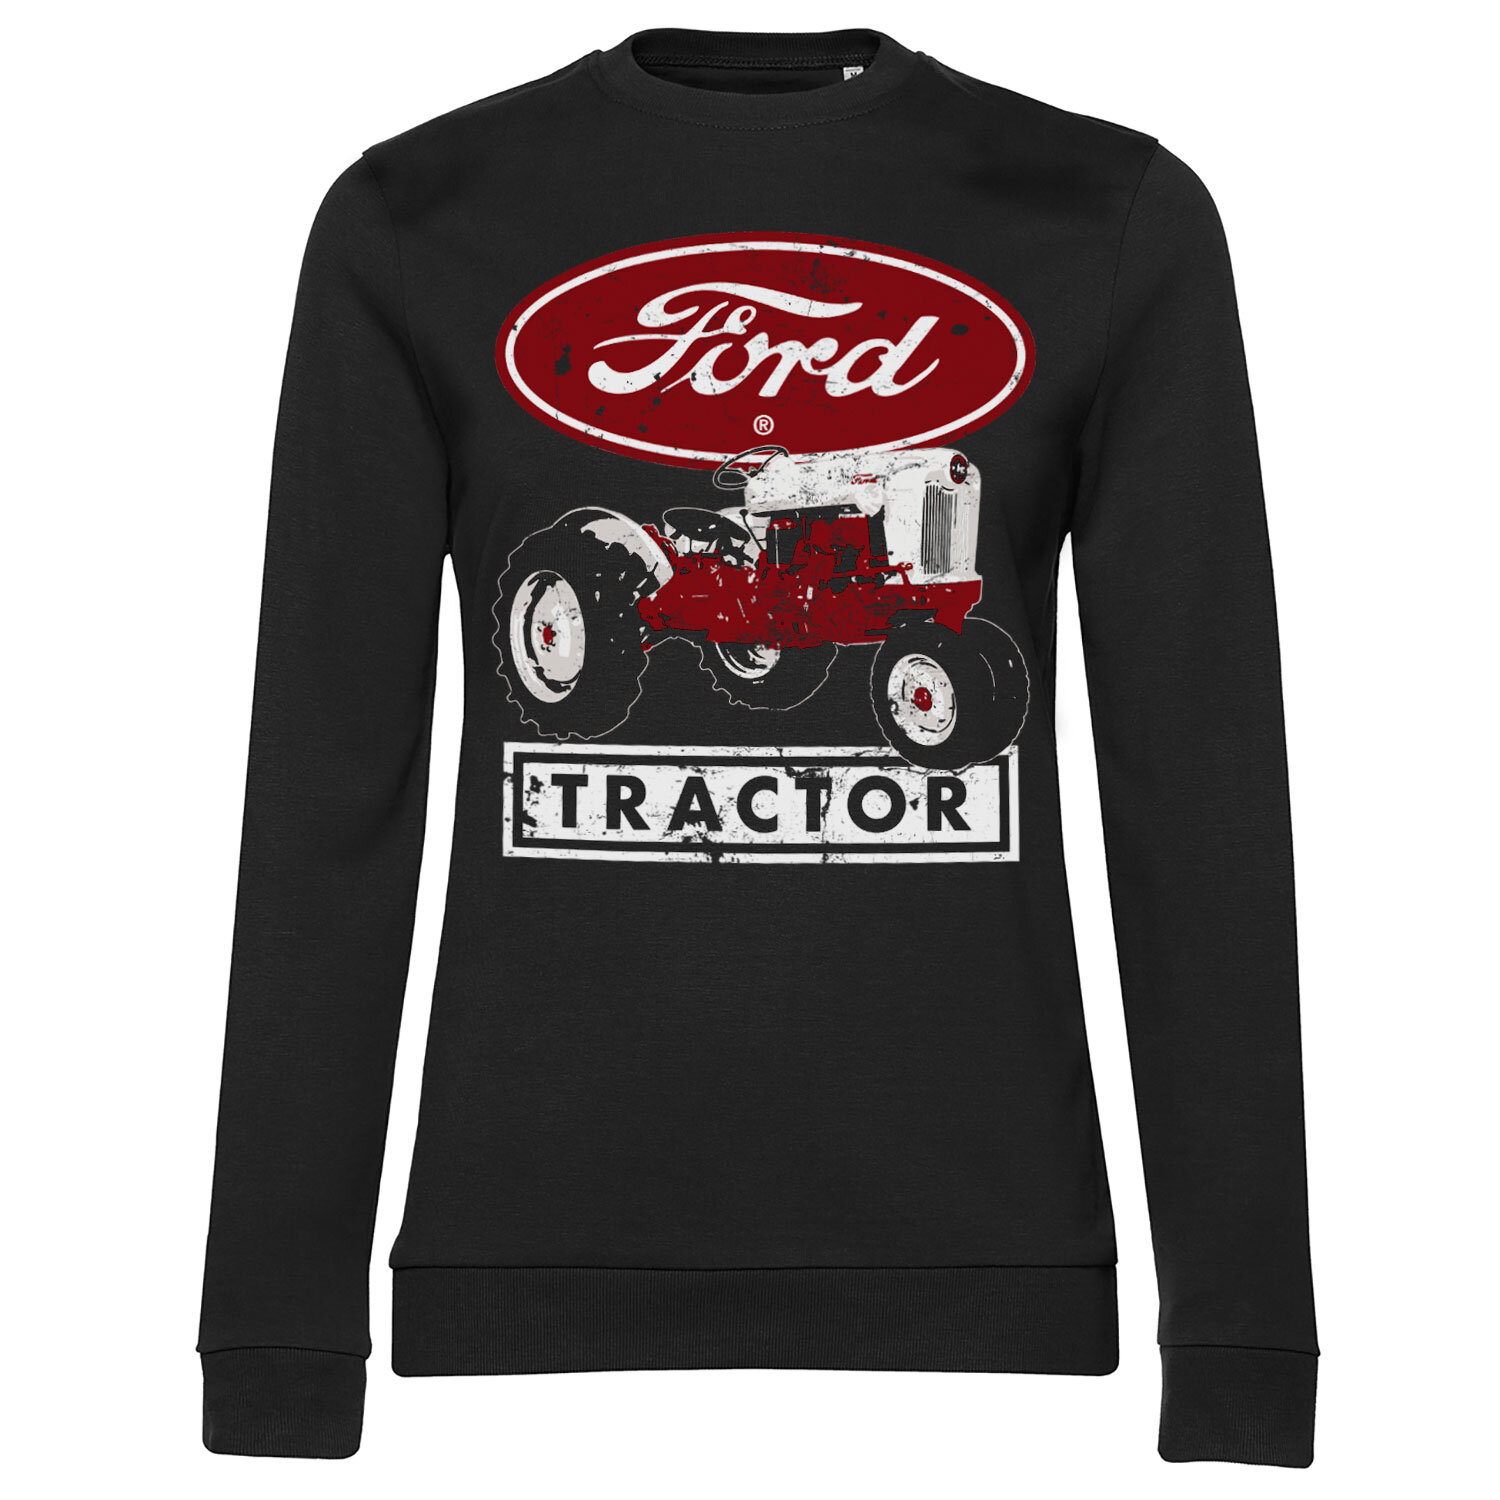 Ford Tractor Girly Sweatshirt